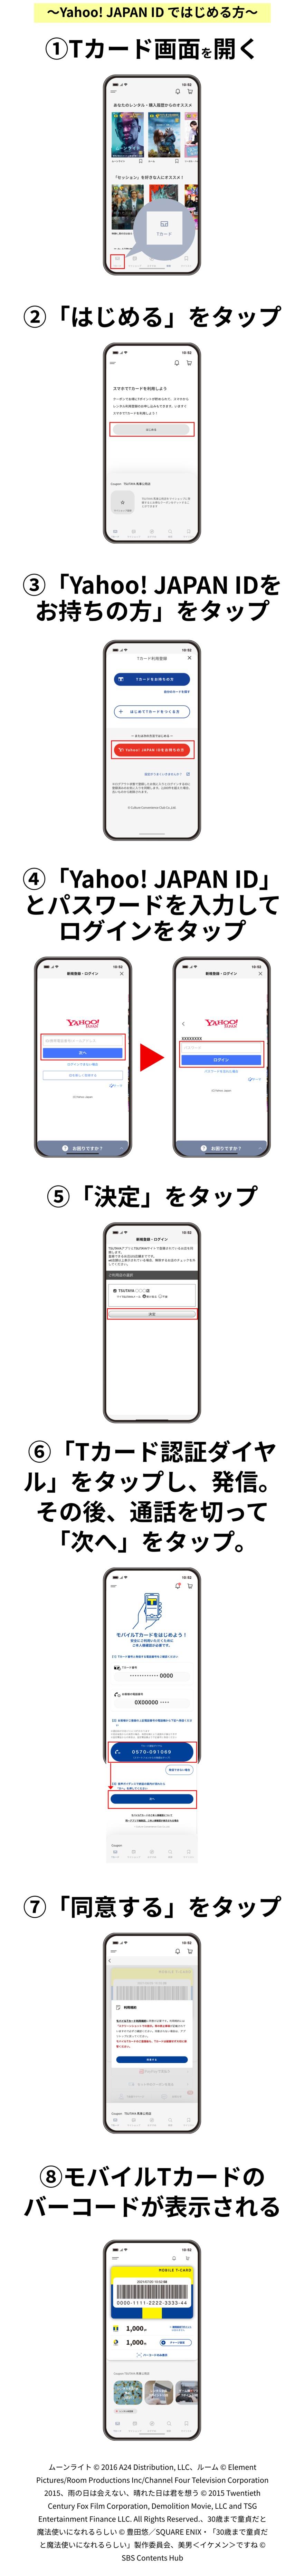 Yahoo! JAPAN IDで始める方